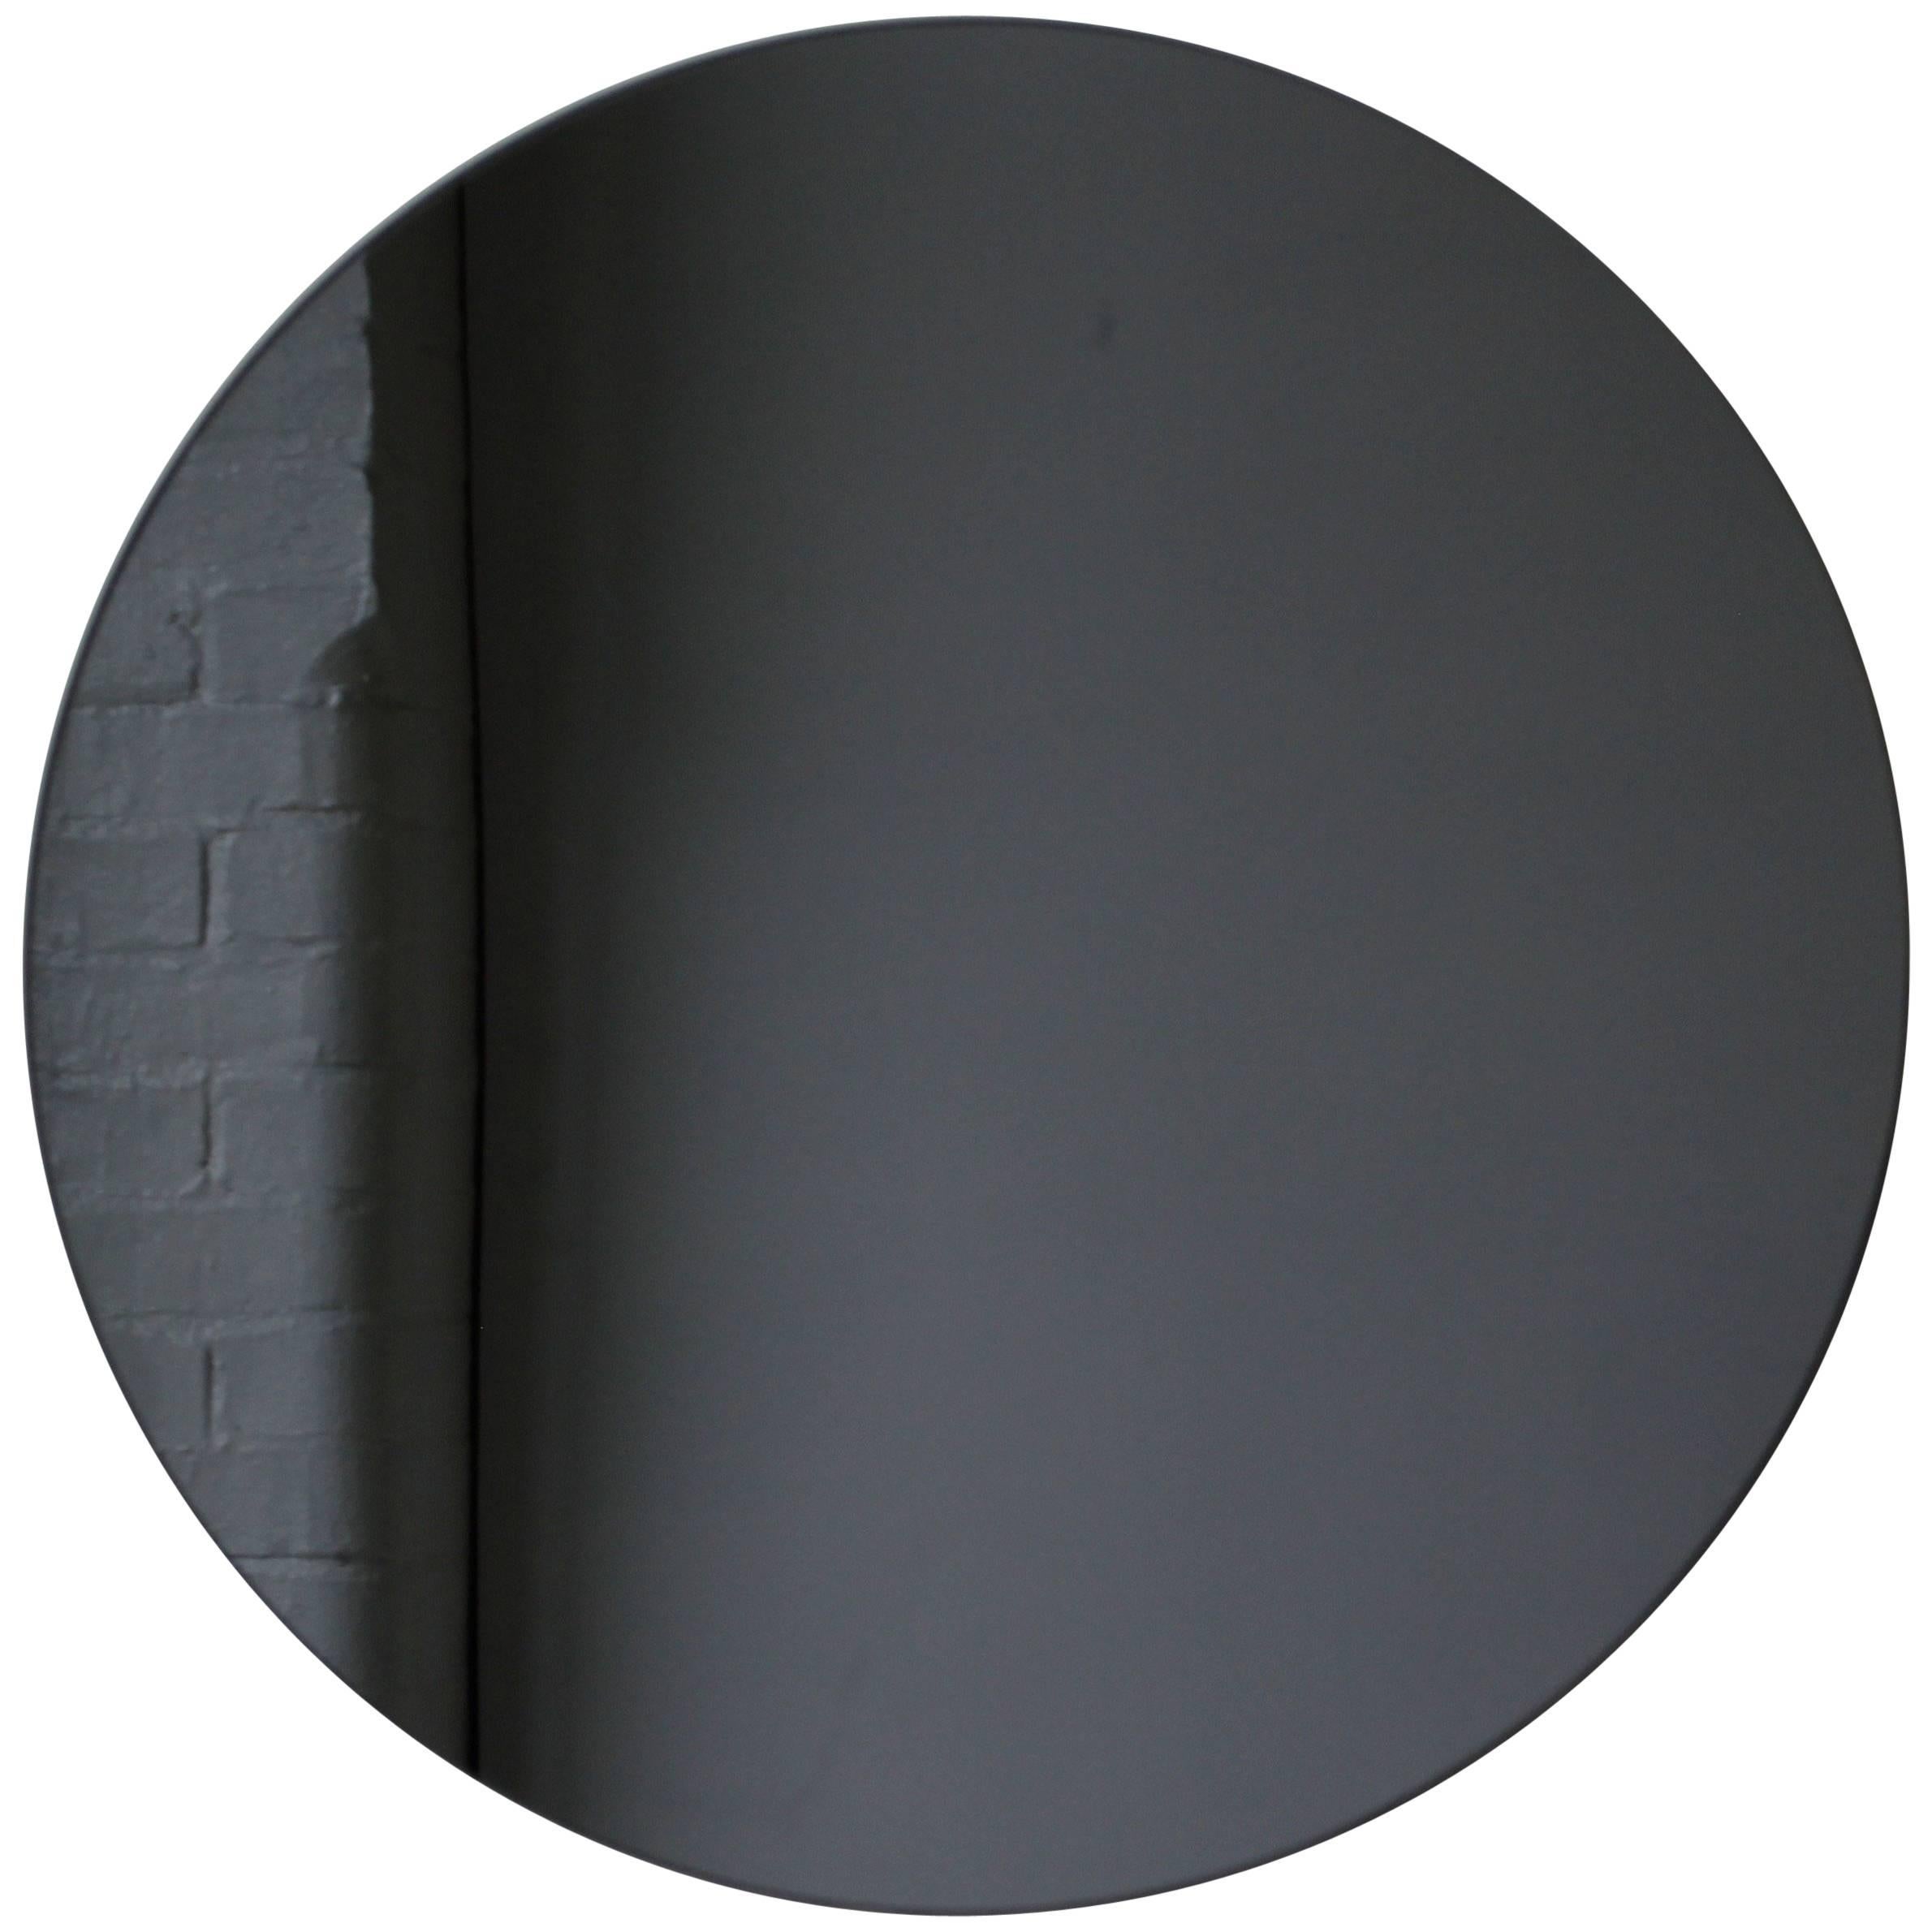 Orbis Black Tinted Round Frameless Modern Mirror with Floating Effect, Medium (Miroir rond sans cadre à effet flottant, noir)